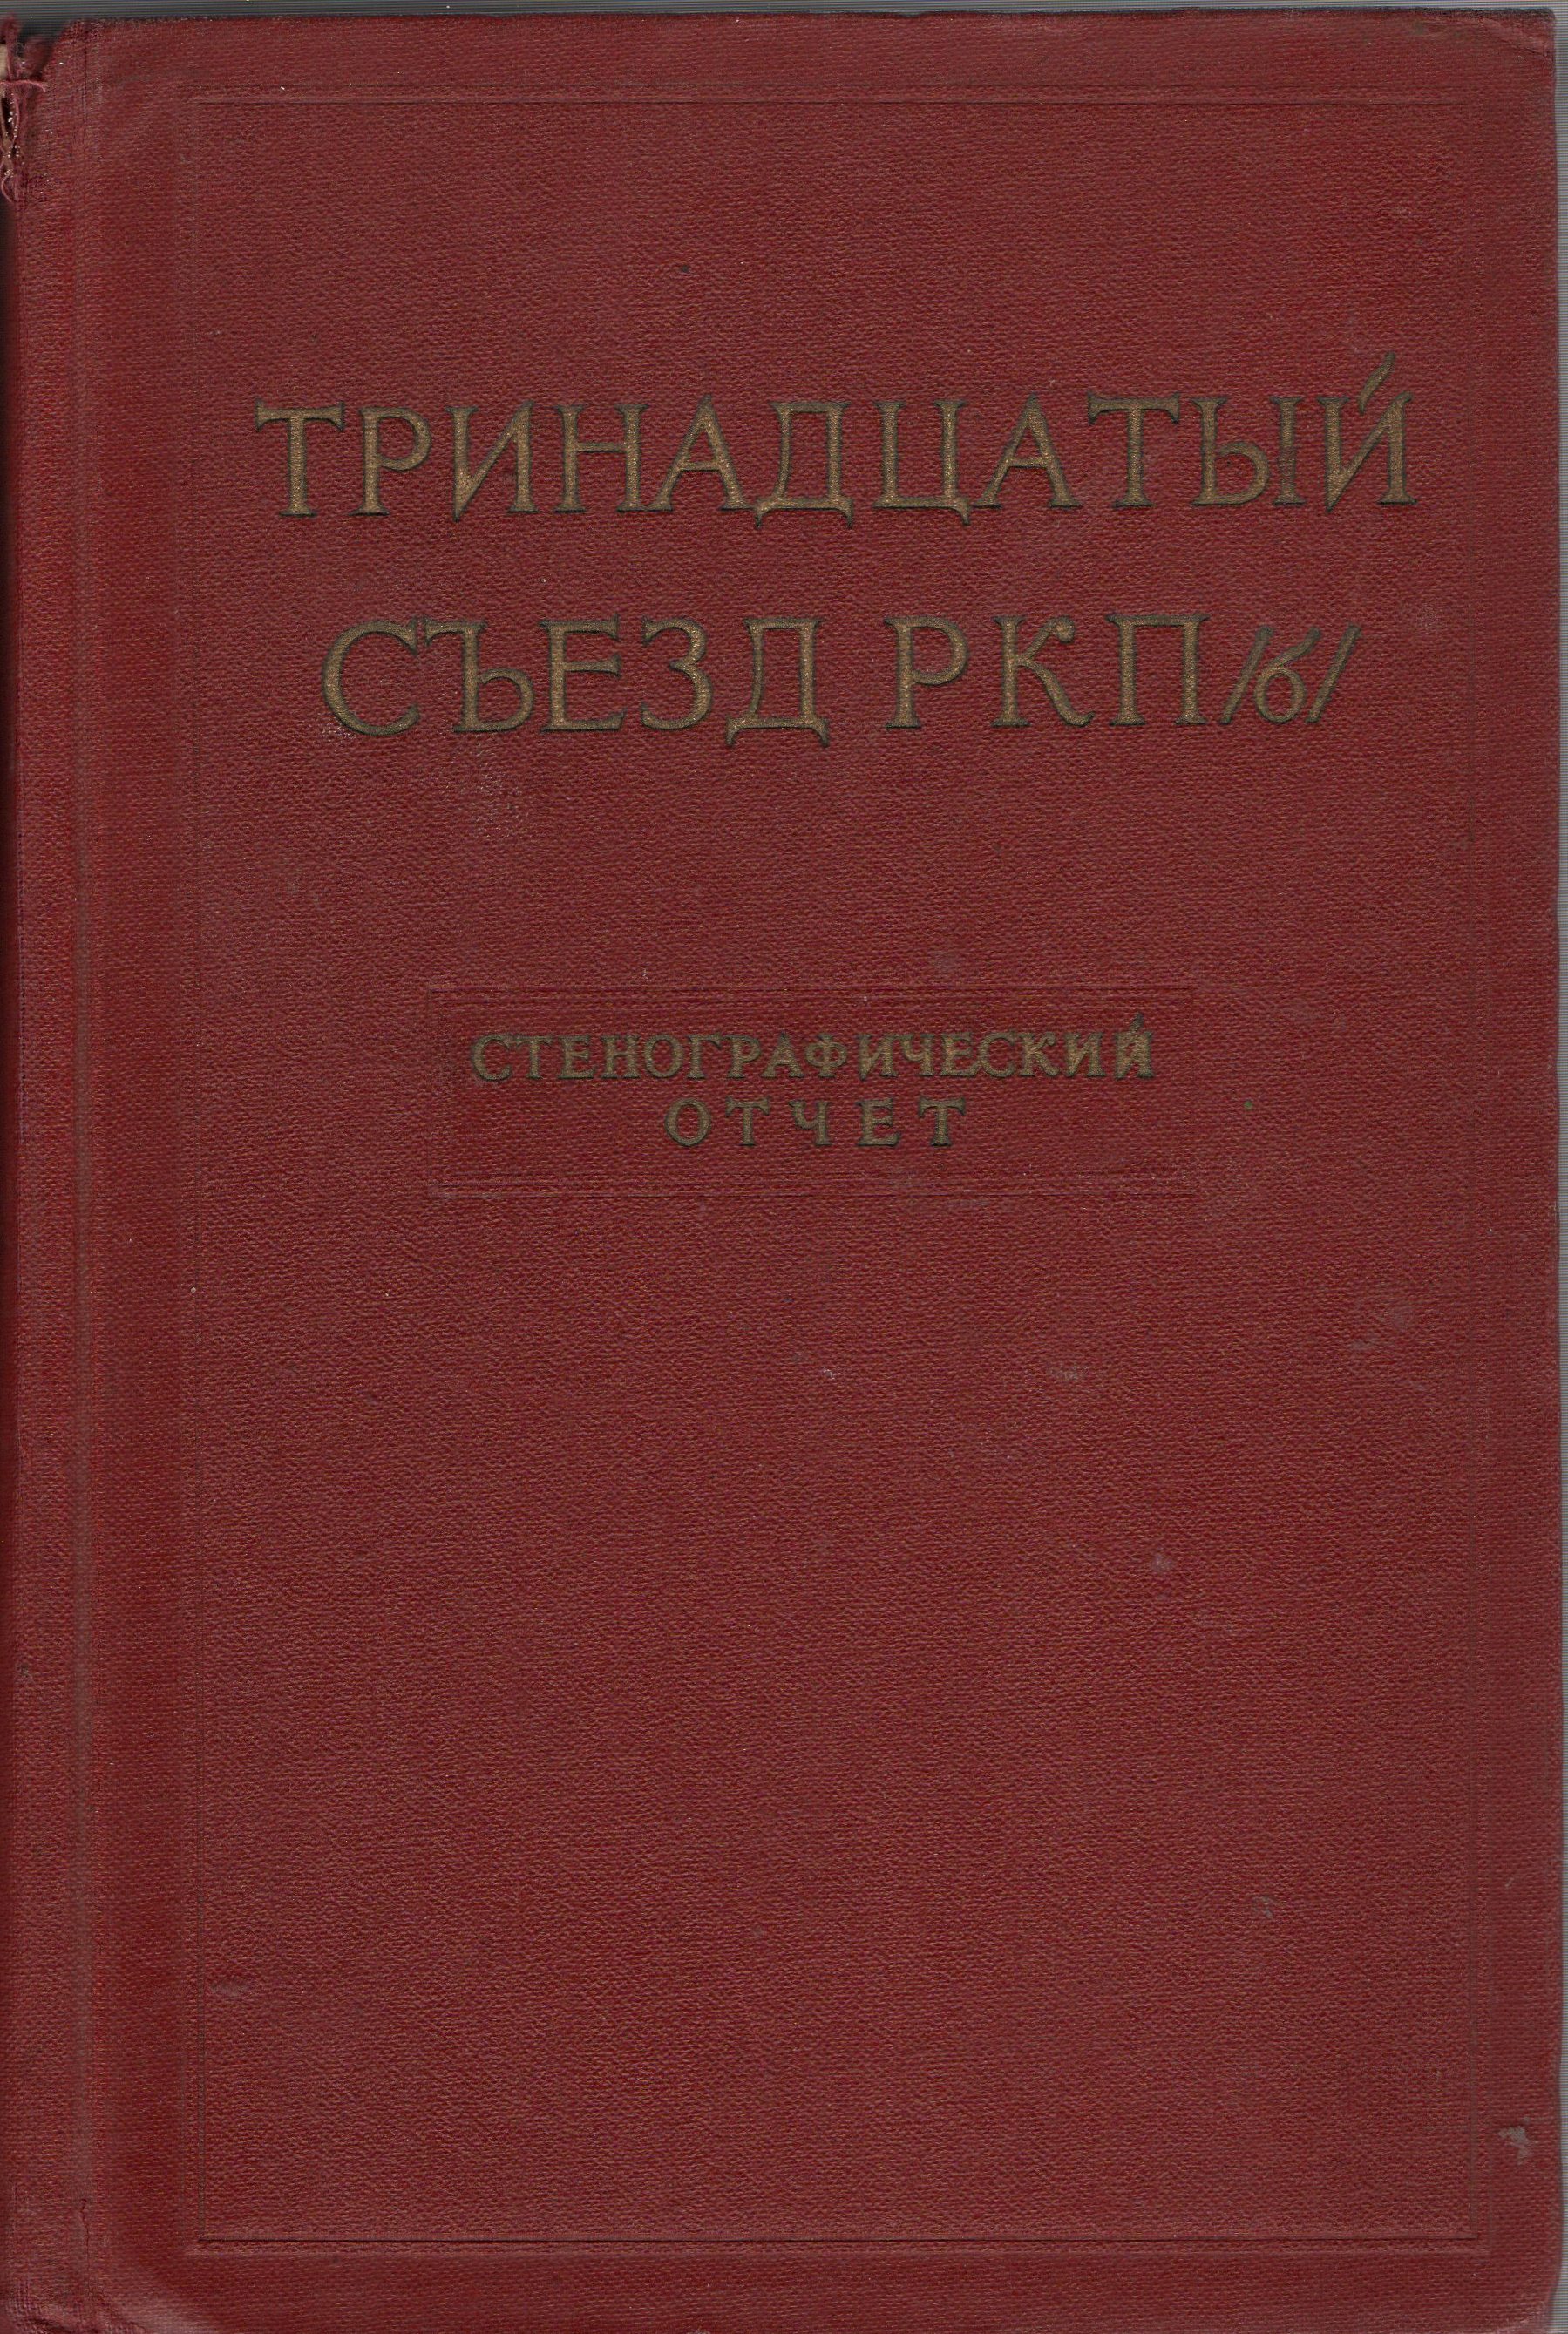 	Книга "Тринадцатый съезд РКП (б). Май 1924 года. Стенографический отчет"